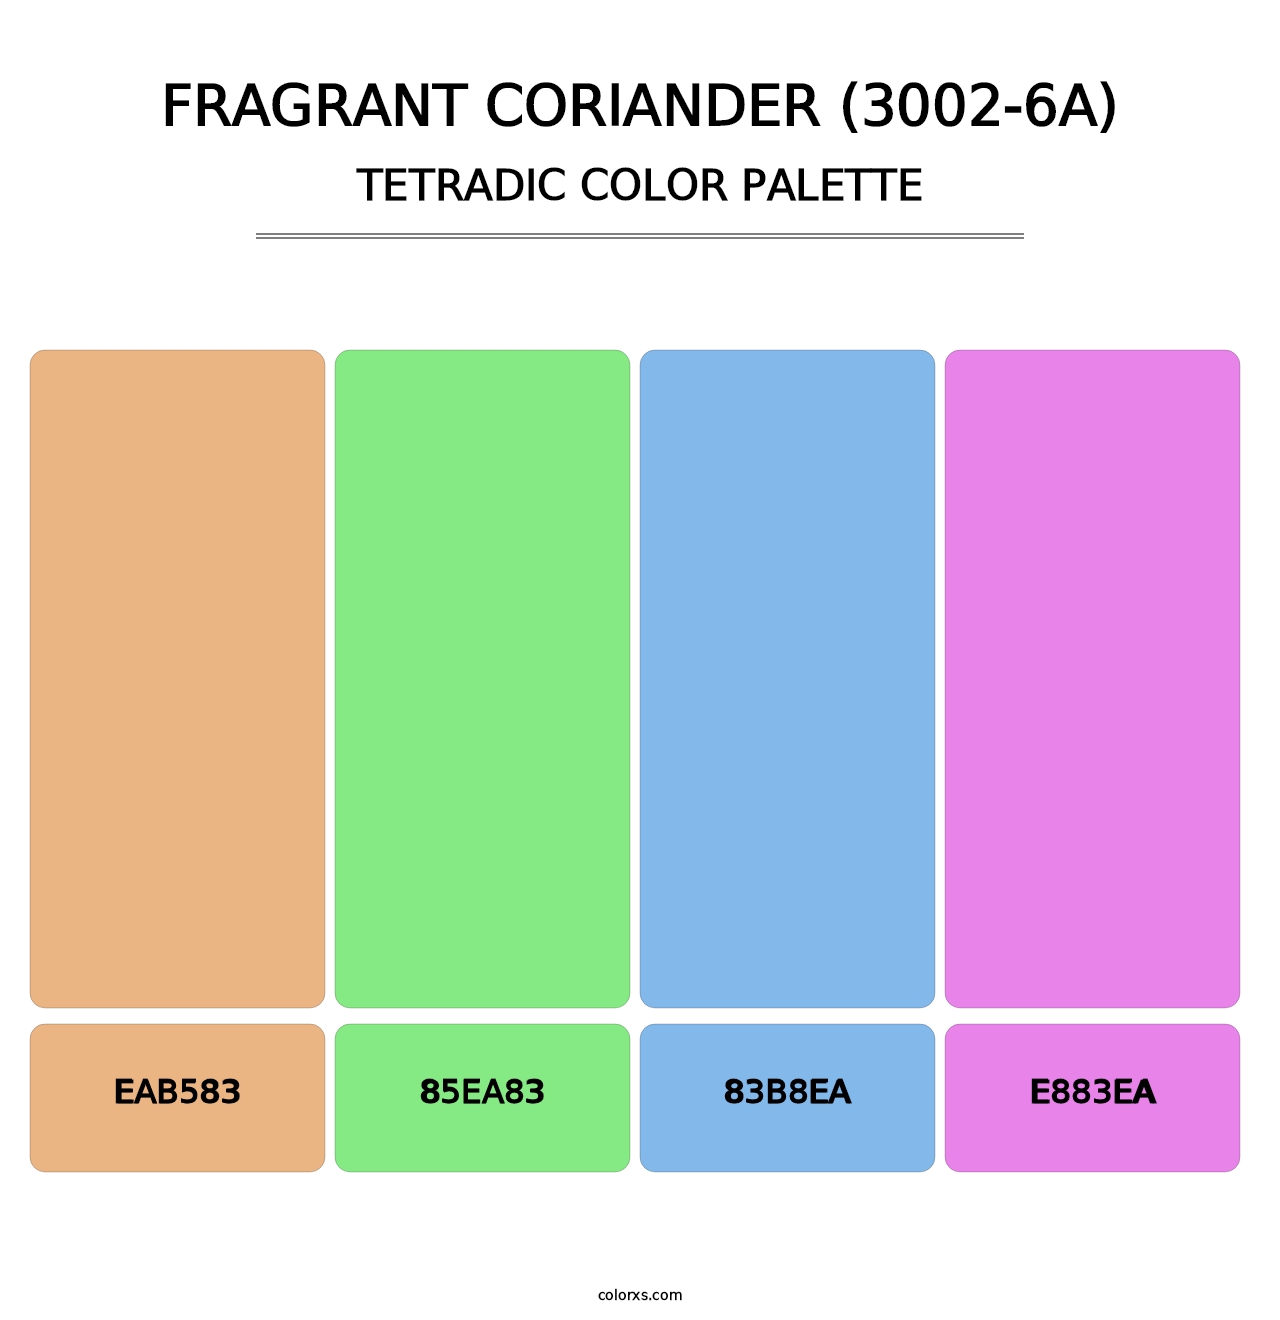 Fragrant Coriander (3002-6A) - Tetradic Color Palette